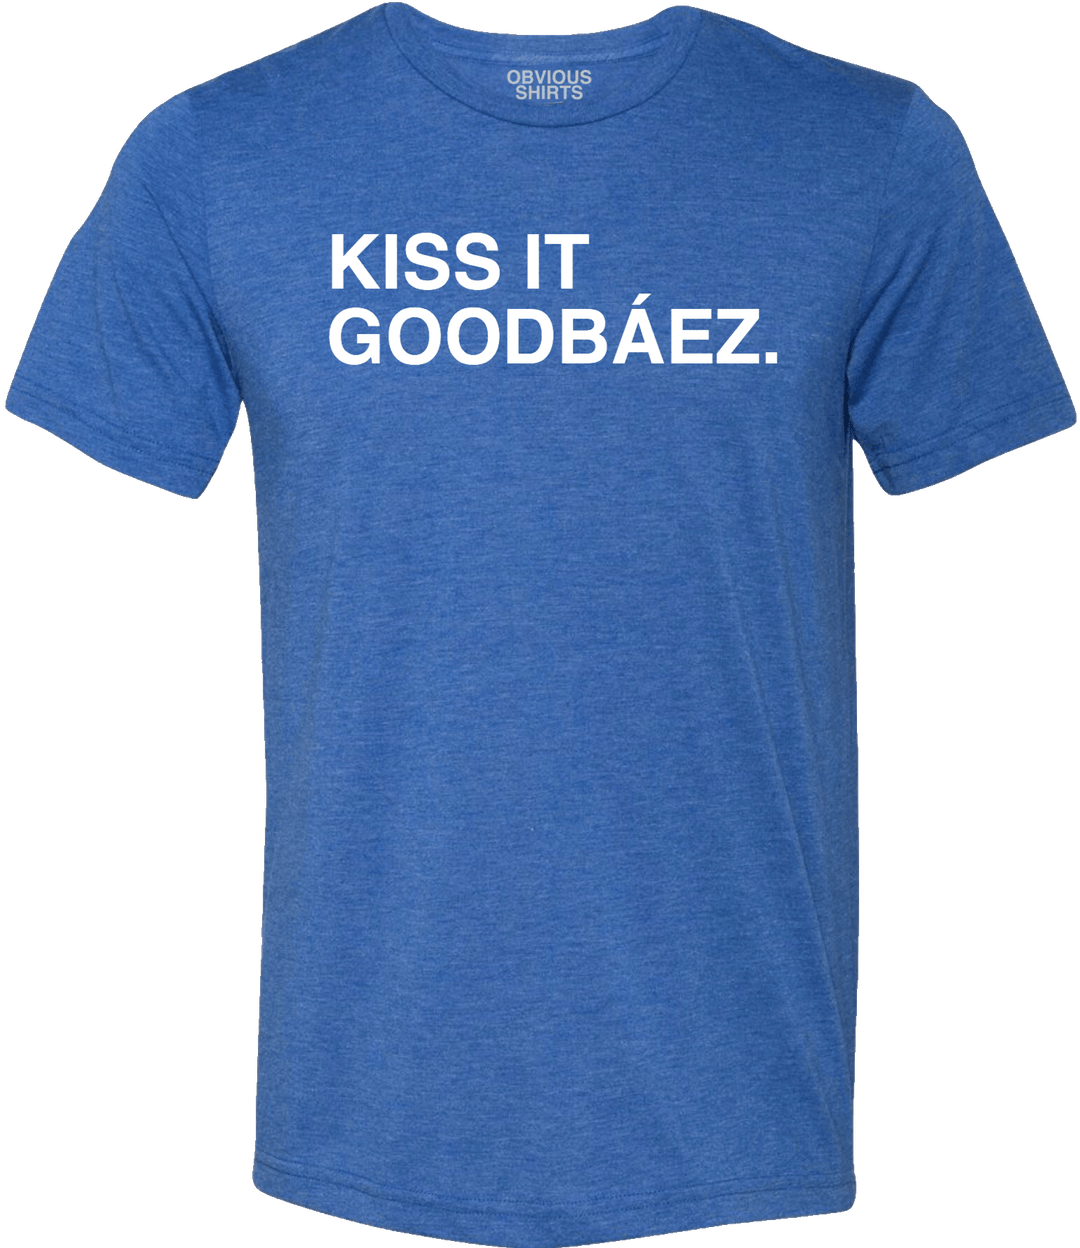 KISS IT GOODBAEZ. - OBVIOUS SHIRTS.